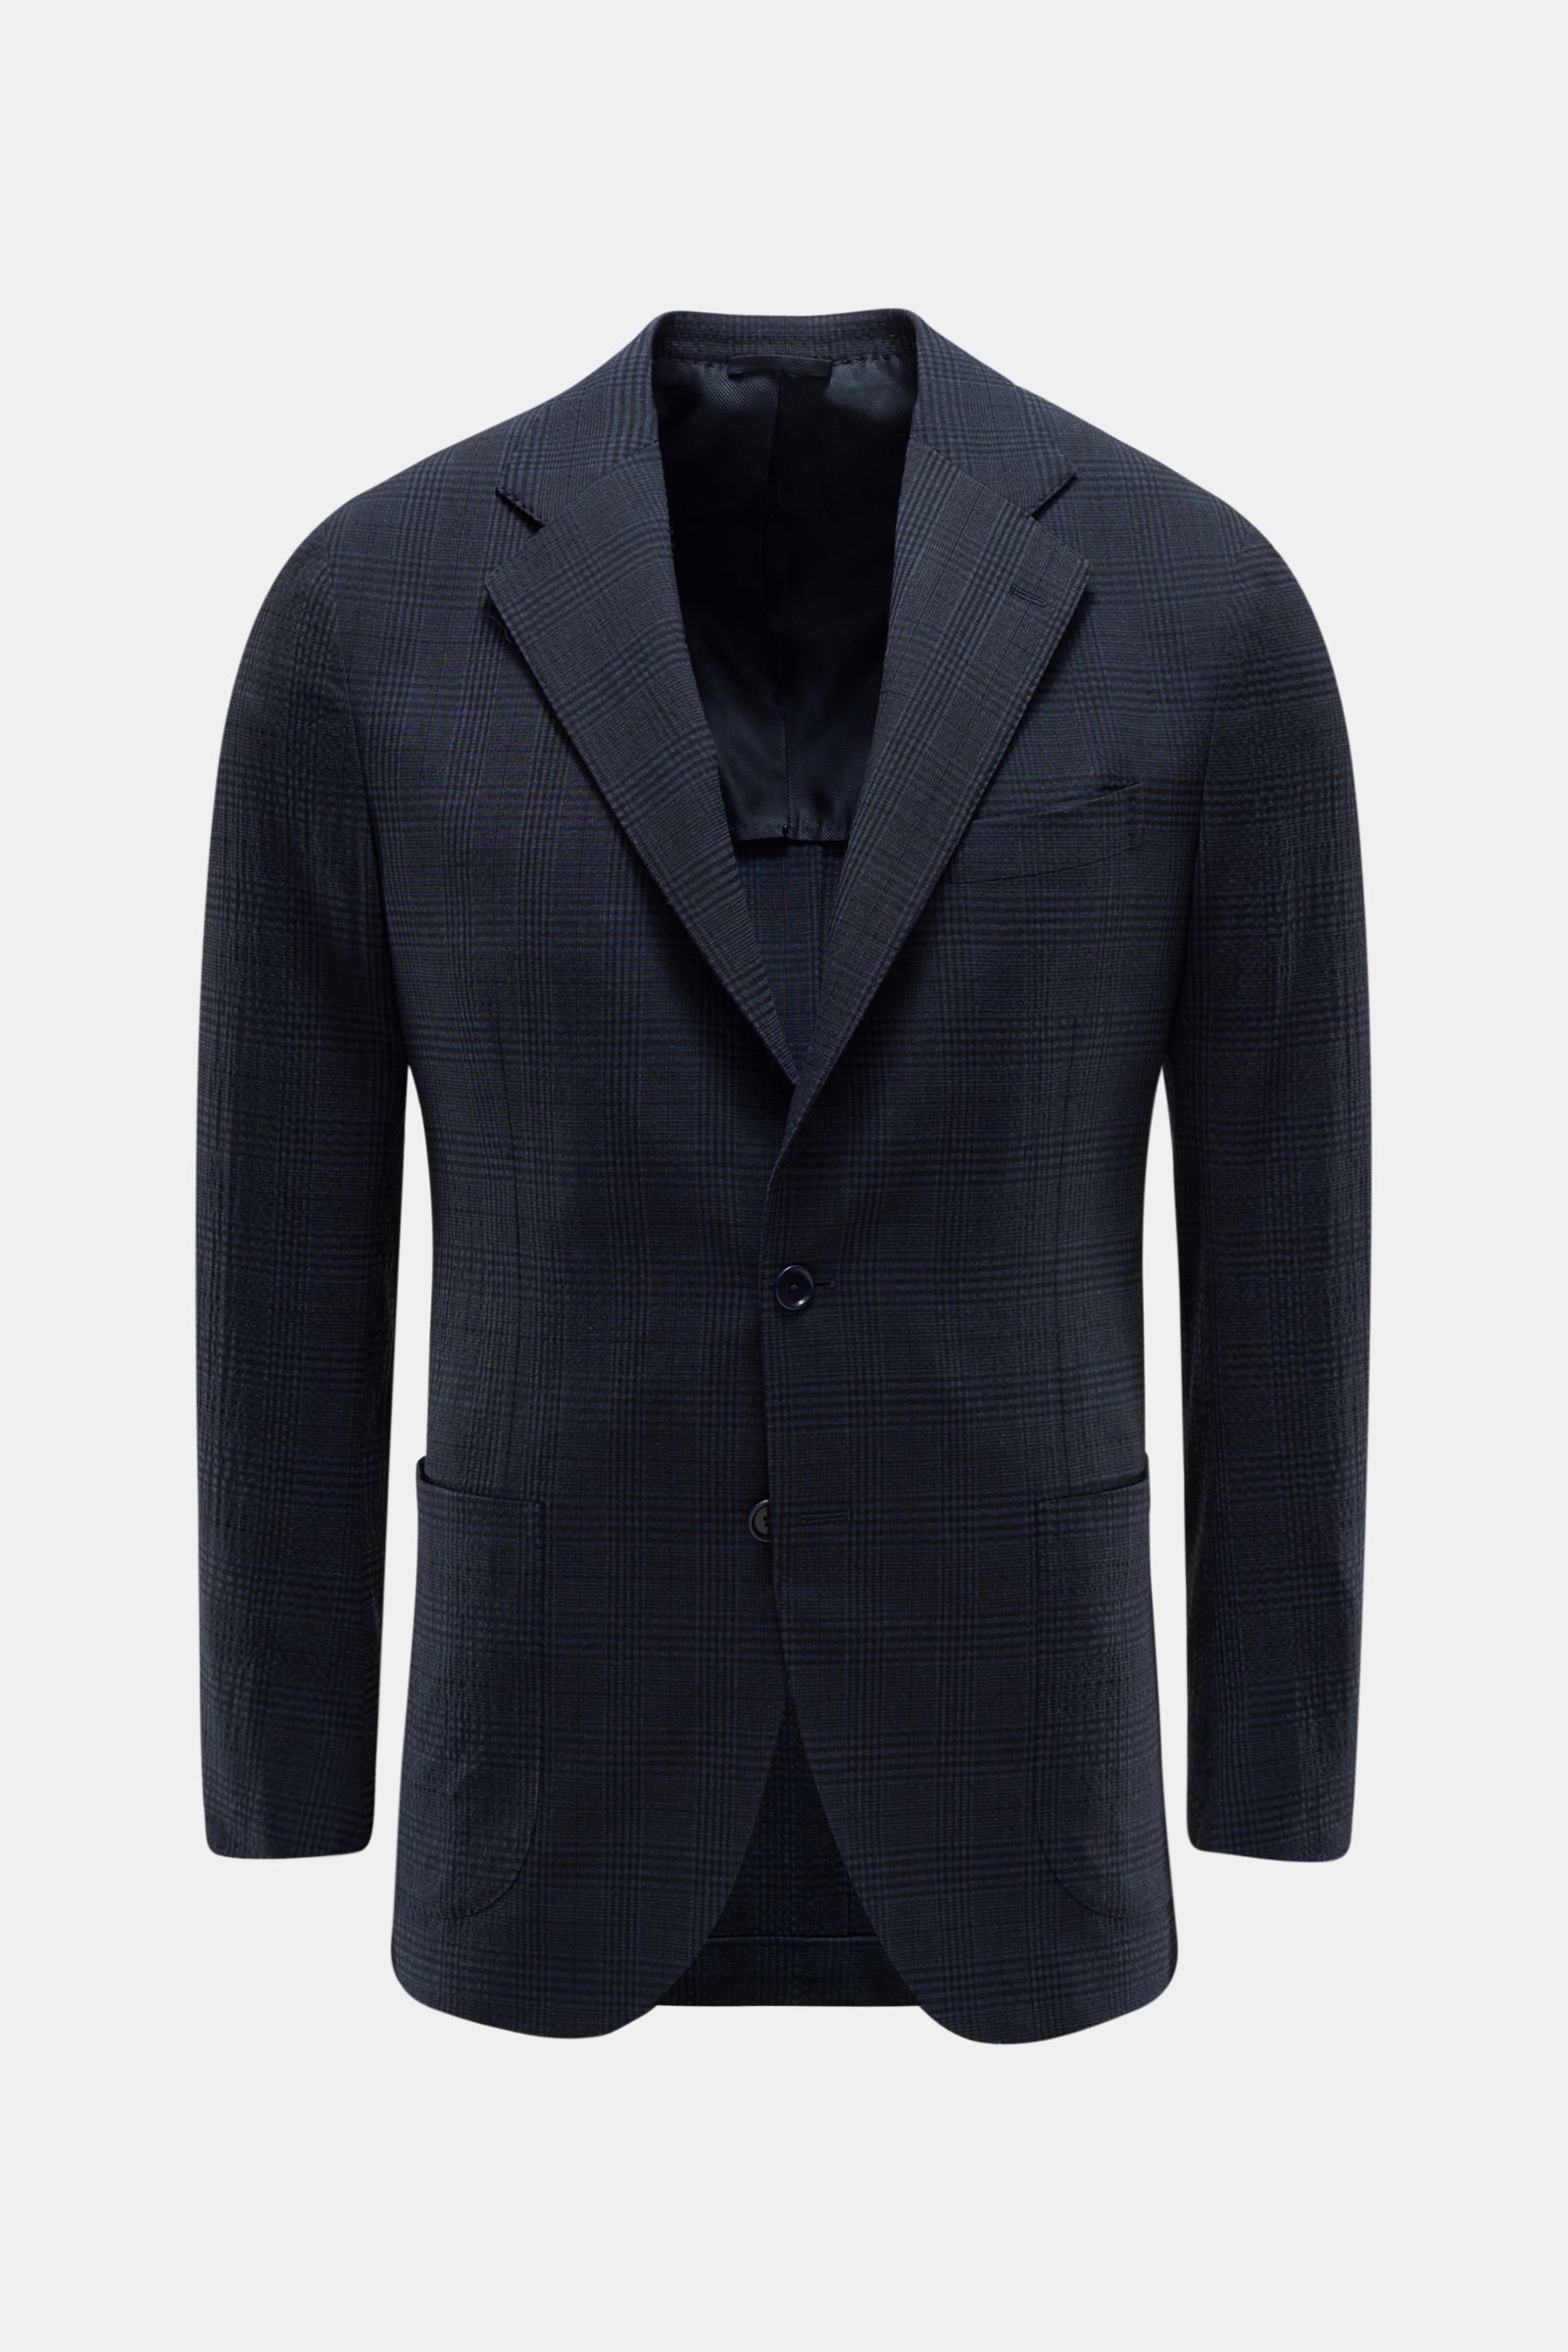 Seersucker smart-casual jacket 'Posillipo' navy/black checked